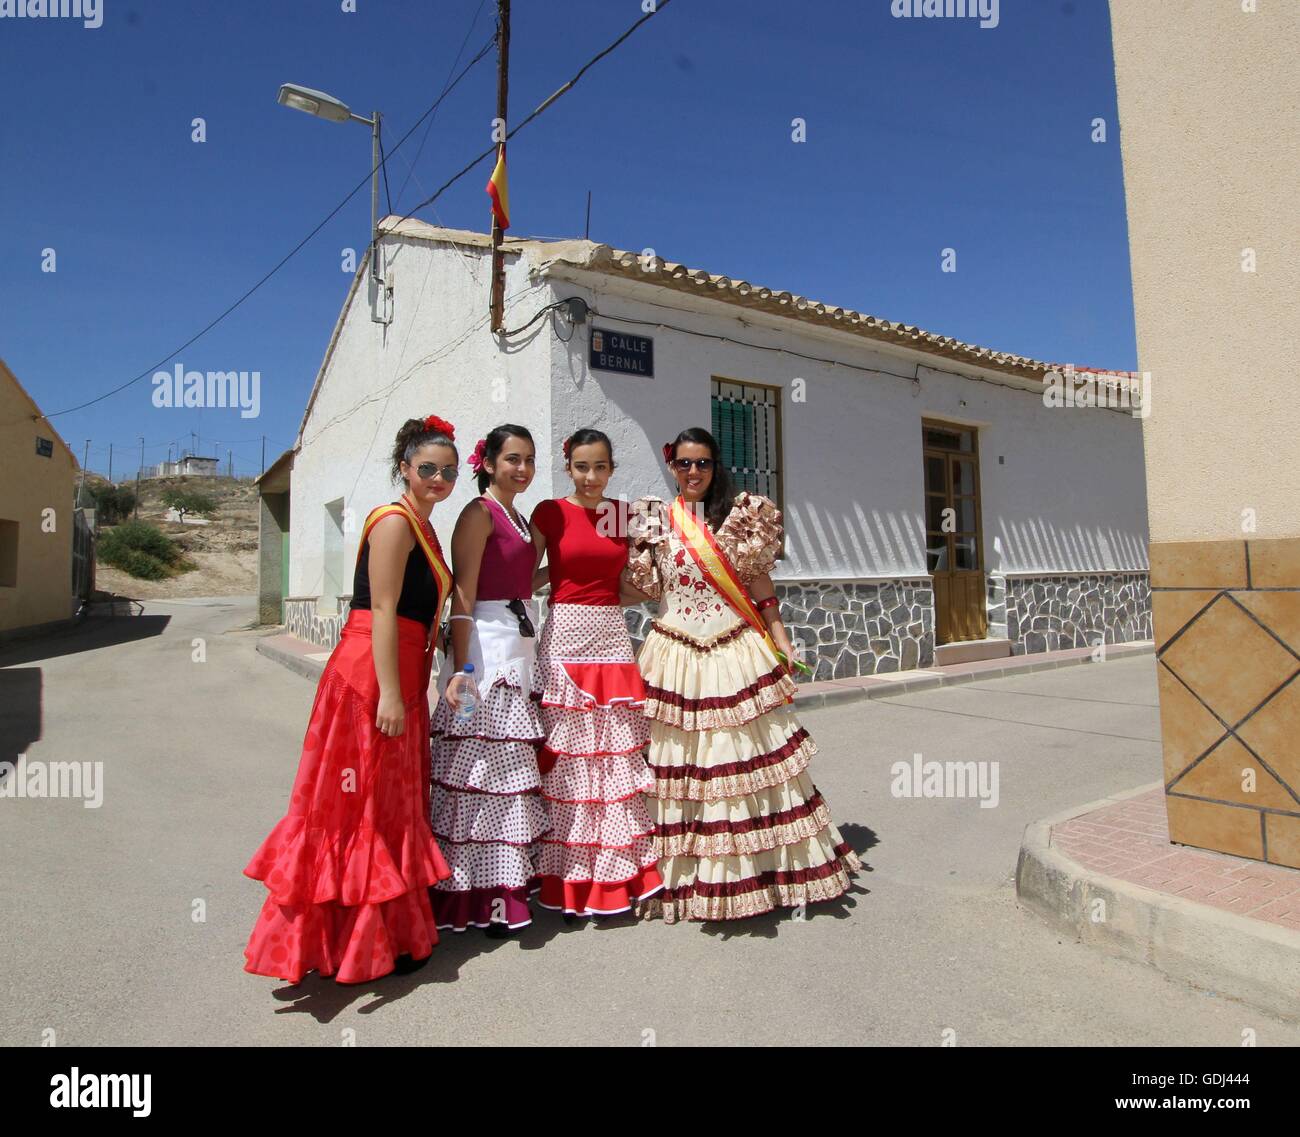 4 mai 2014. La Murta Fiesta, Bellavista, Murcia, Espagne. Les jeunes femmes en costume traditionnel. Banque D'Images